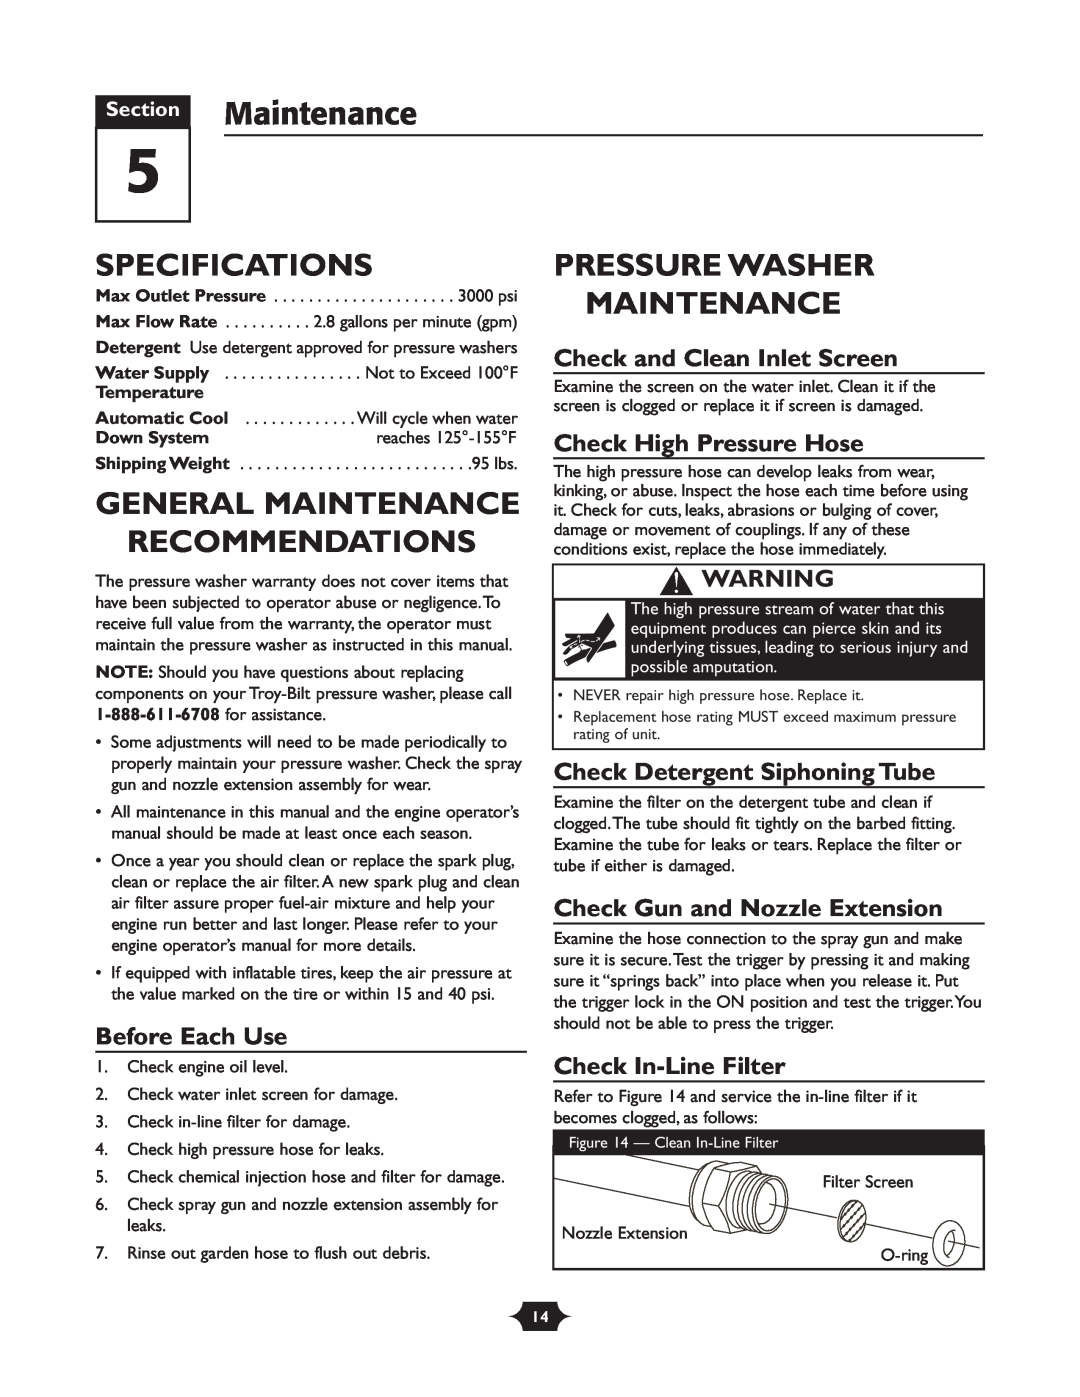 Troy-Bilt 020242-4 Section Maintenance, Specifications, General Maintenance Recommendations, Pressure Washer Maintenance 